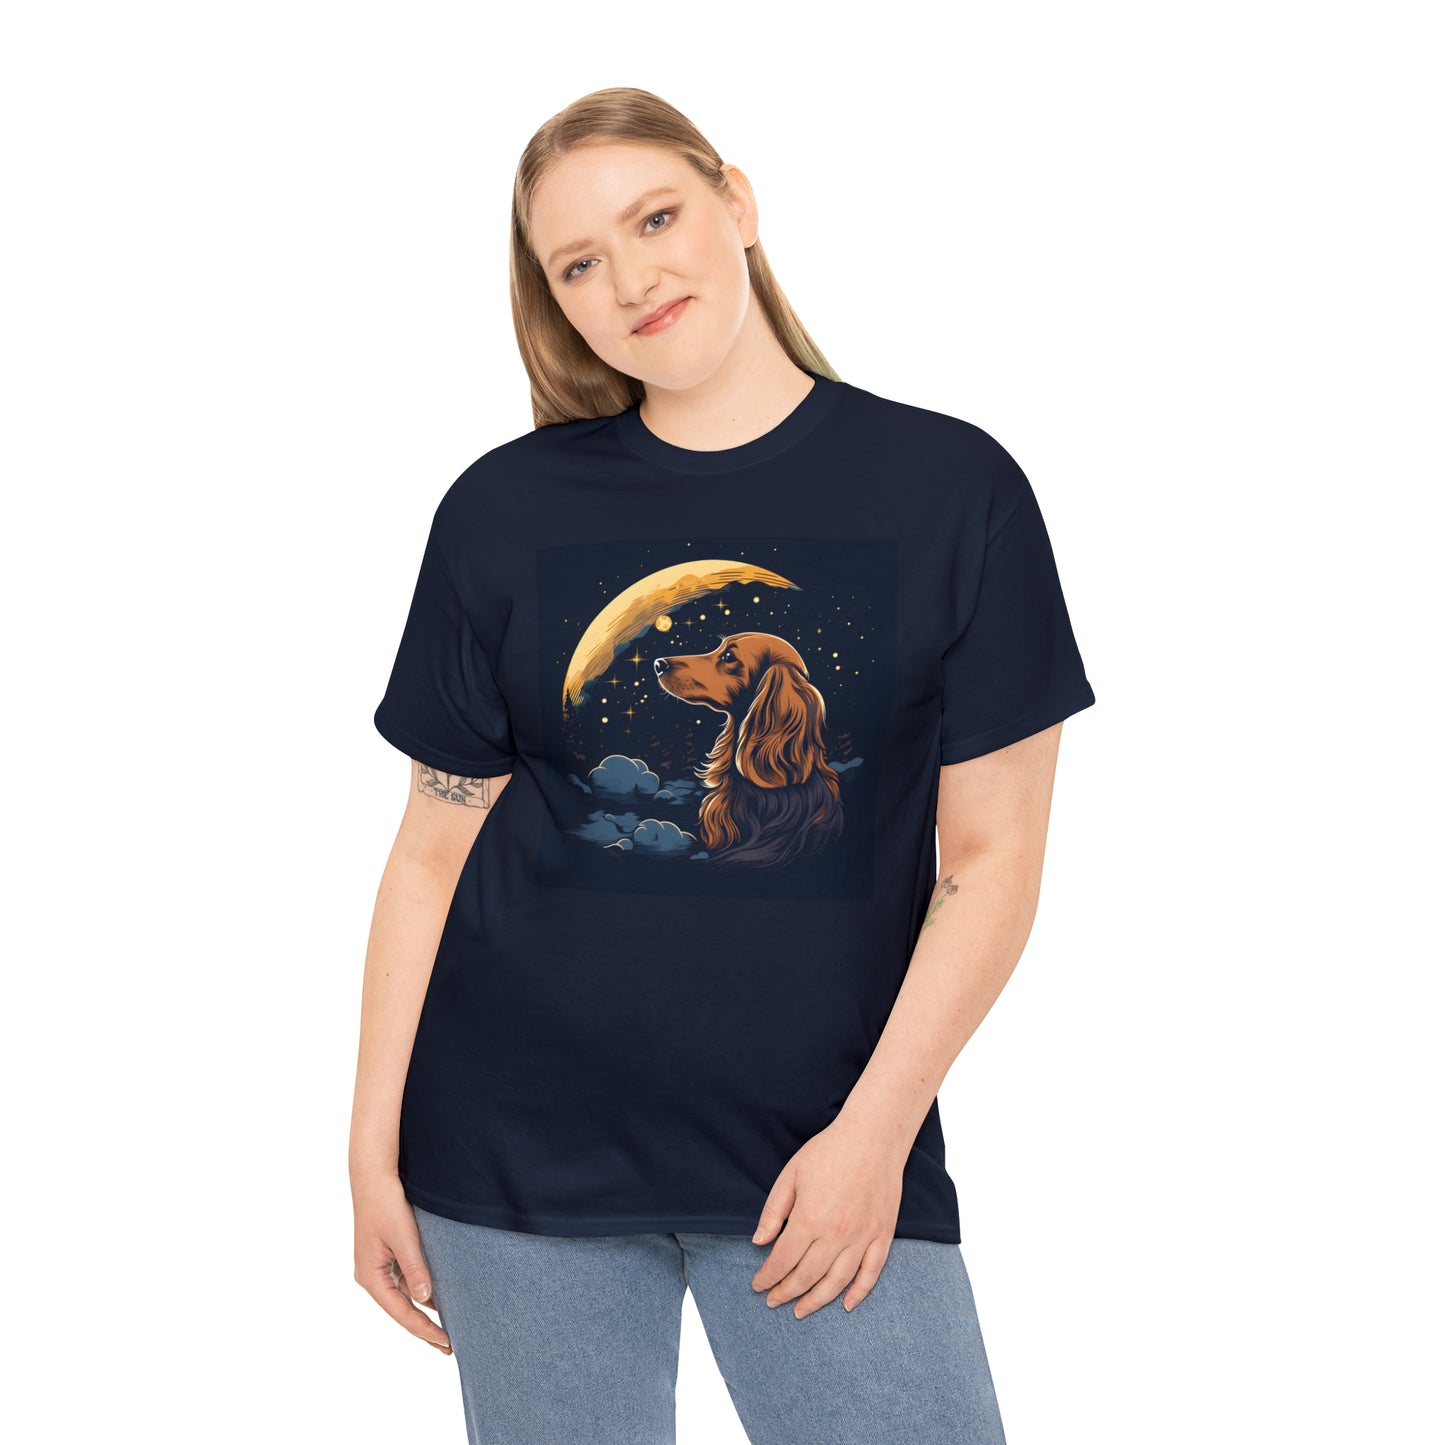 Dachshund Classic Cotton T-Shirt: "Stargazer"